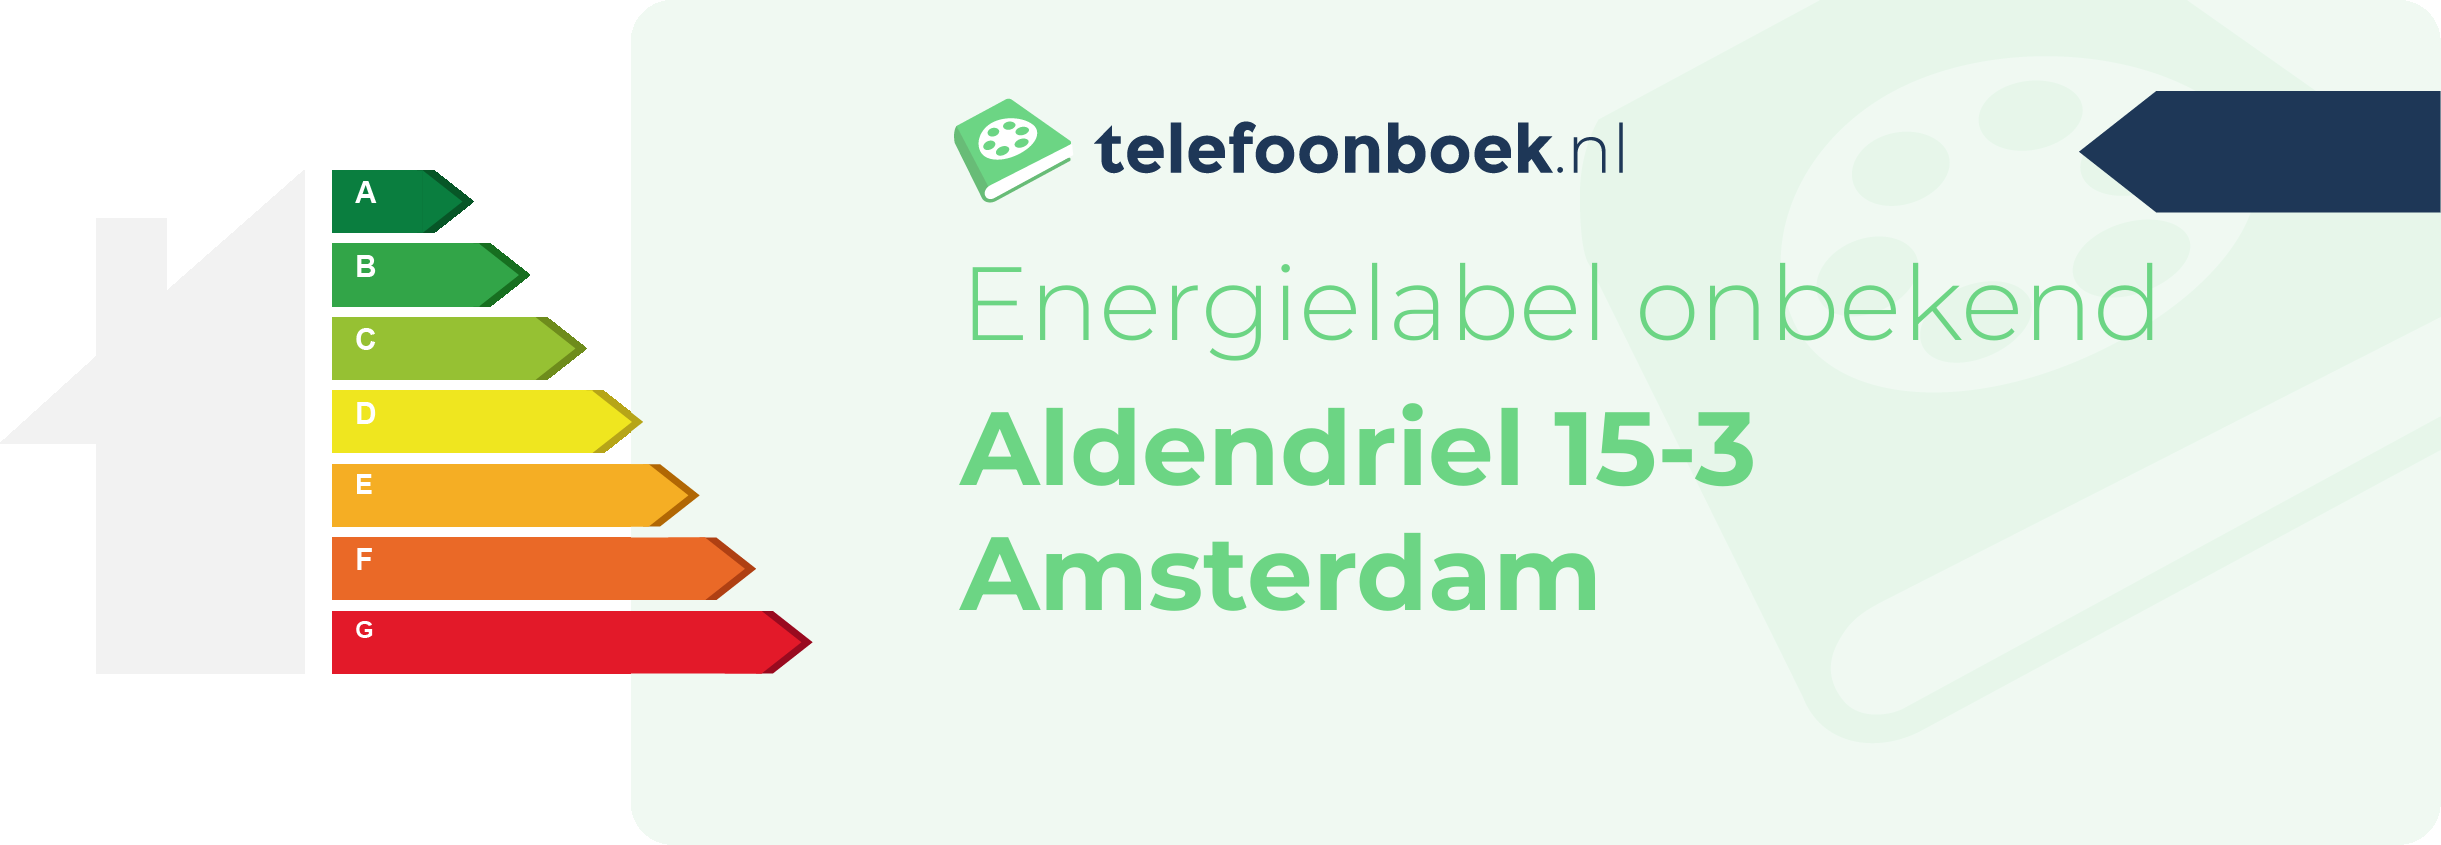 Energielabel Aldendriel 15-3 Amsterdam